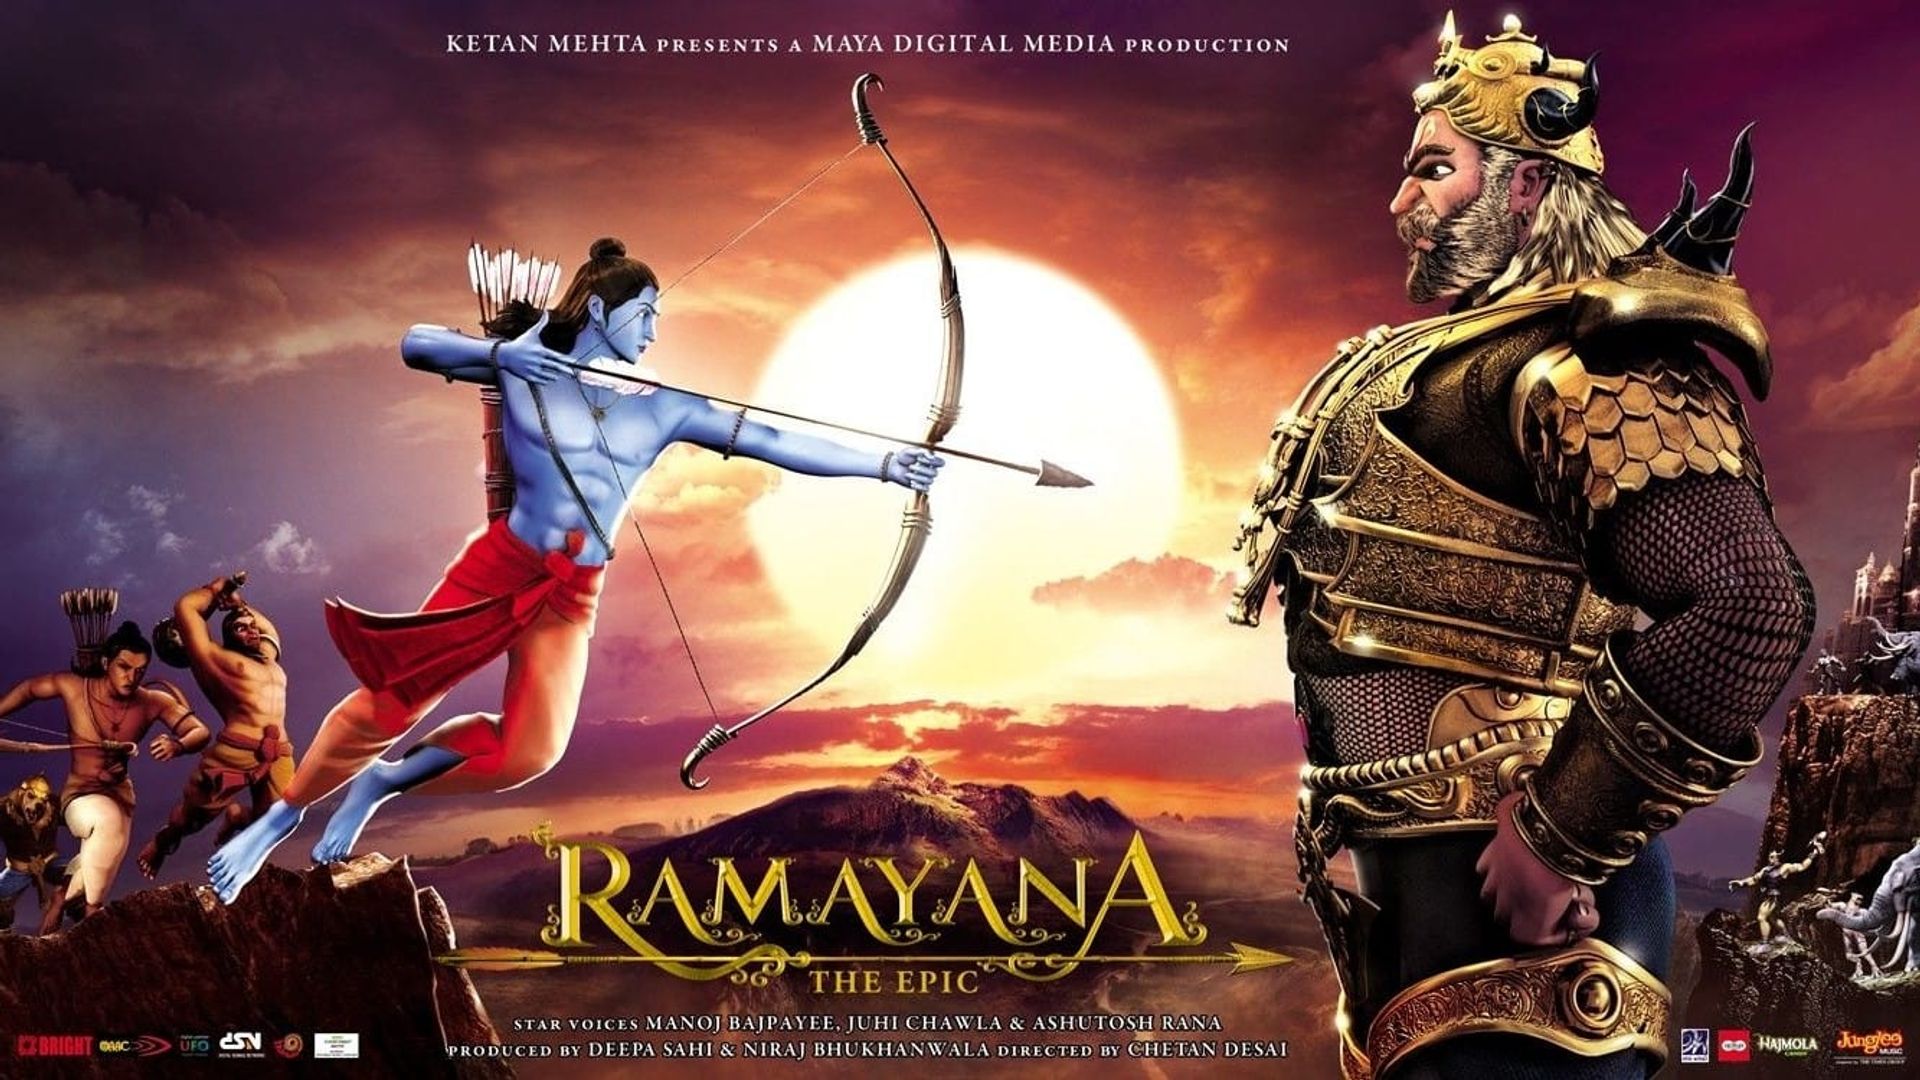 Ramayana: The Epic background